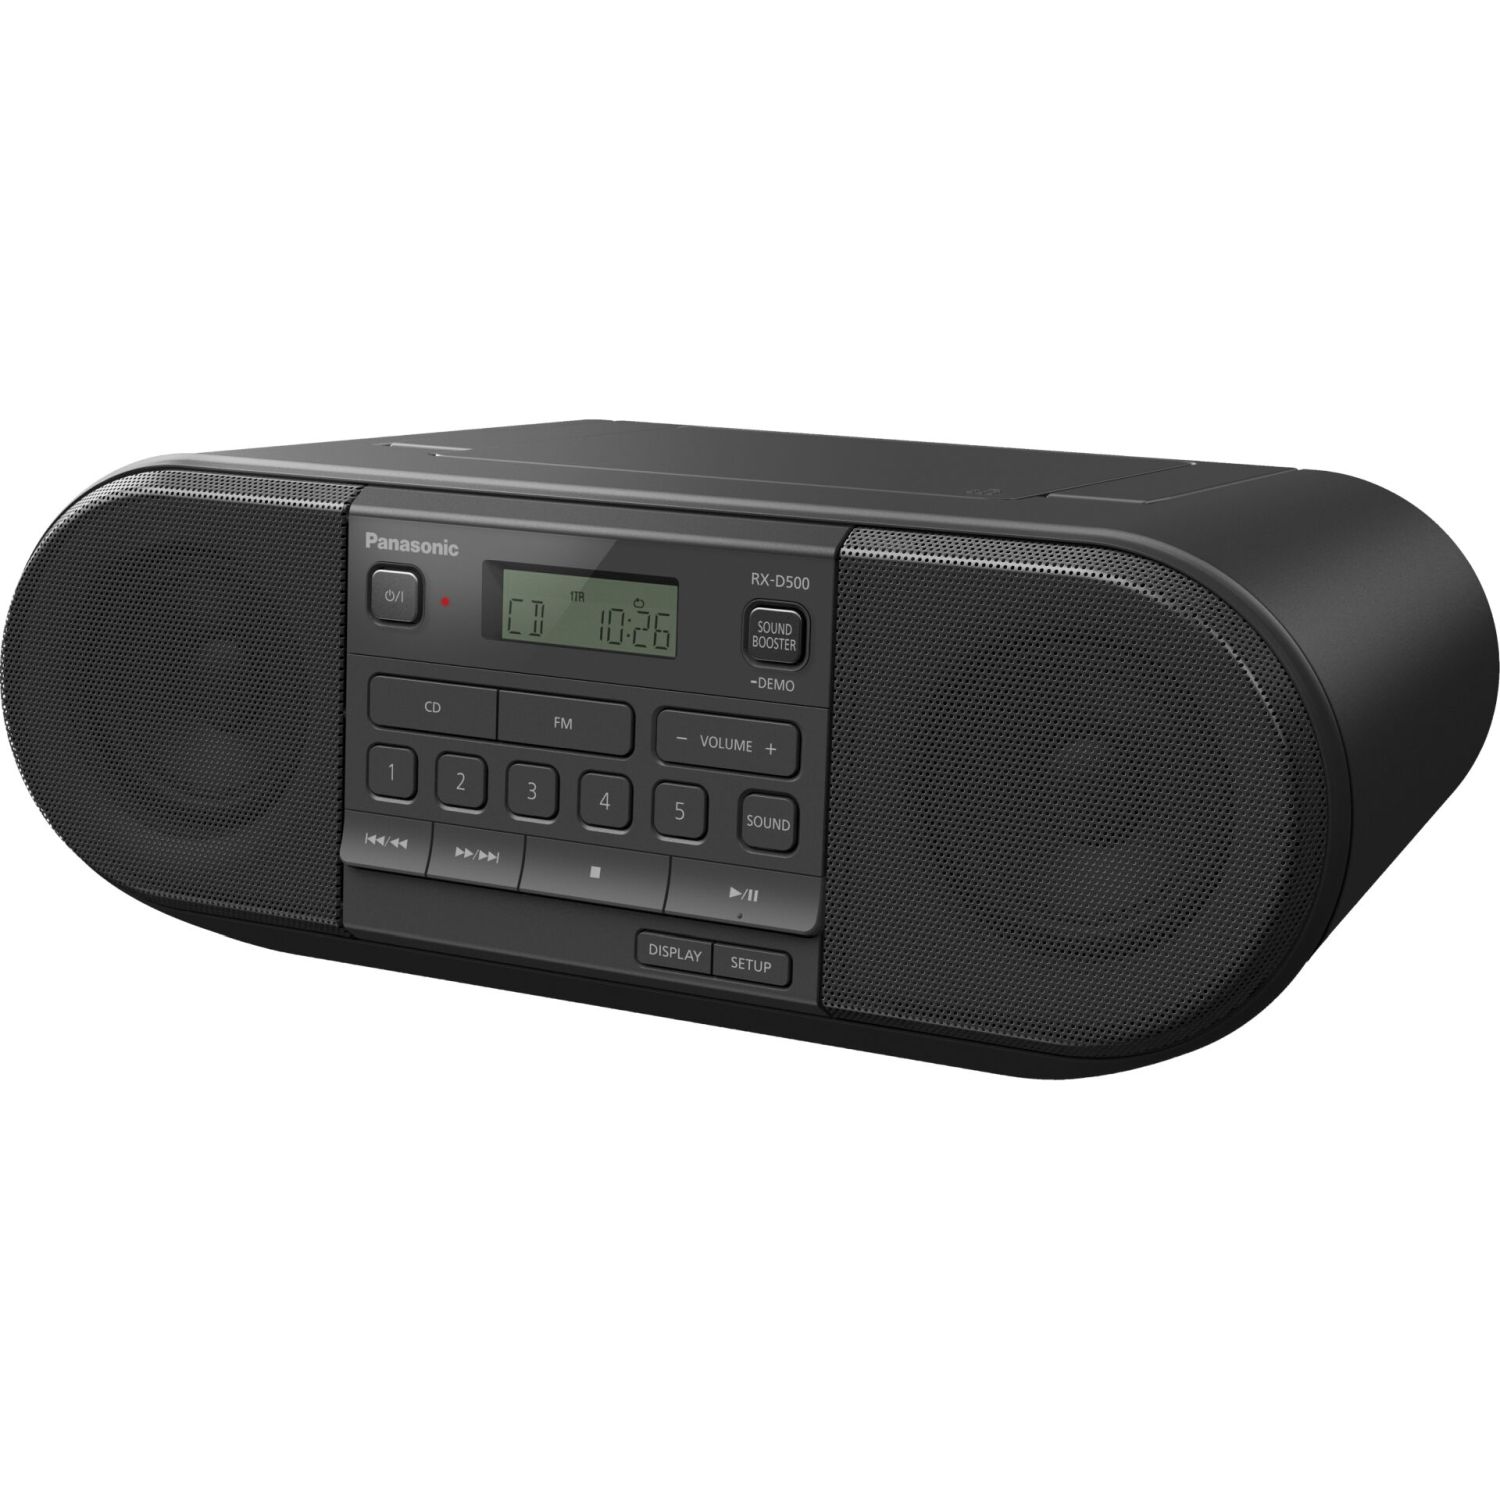 Box Radio Boom CD RX-D500EG-K Panasonic UKW